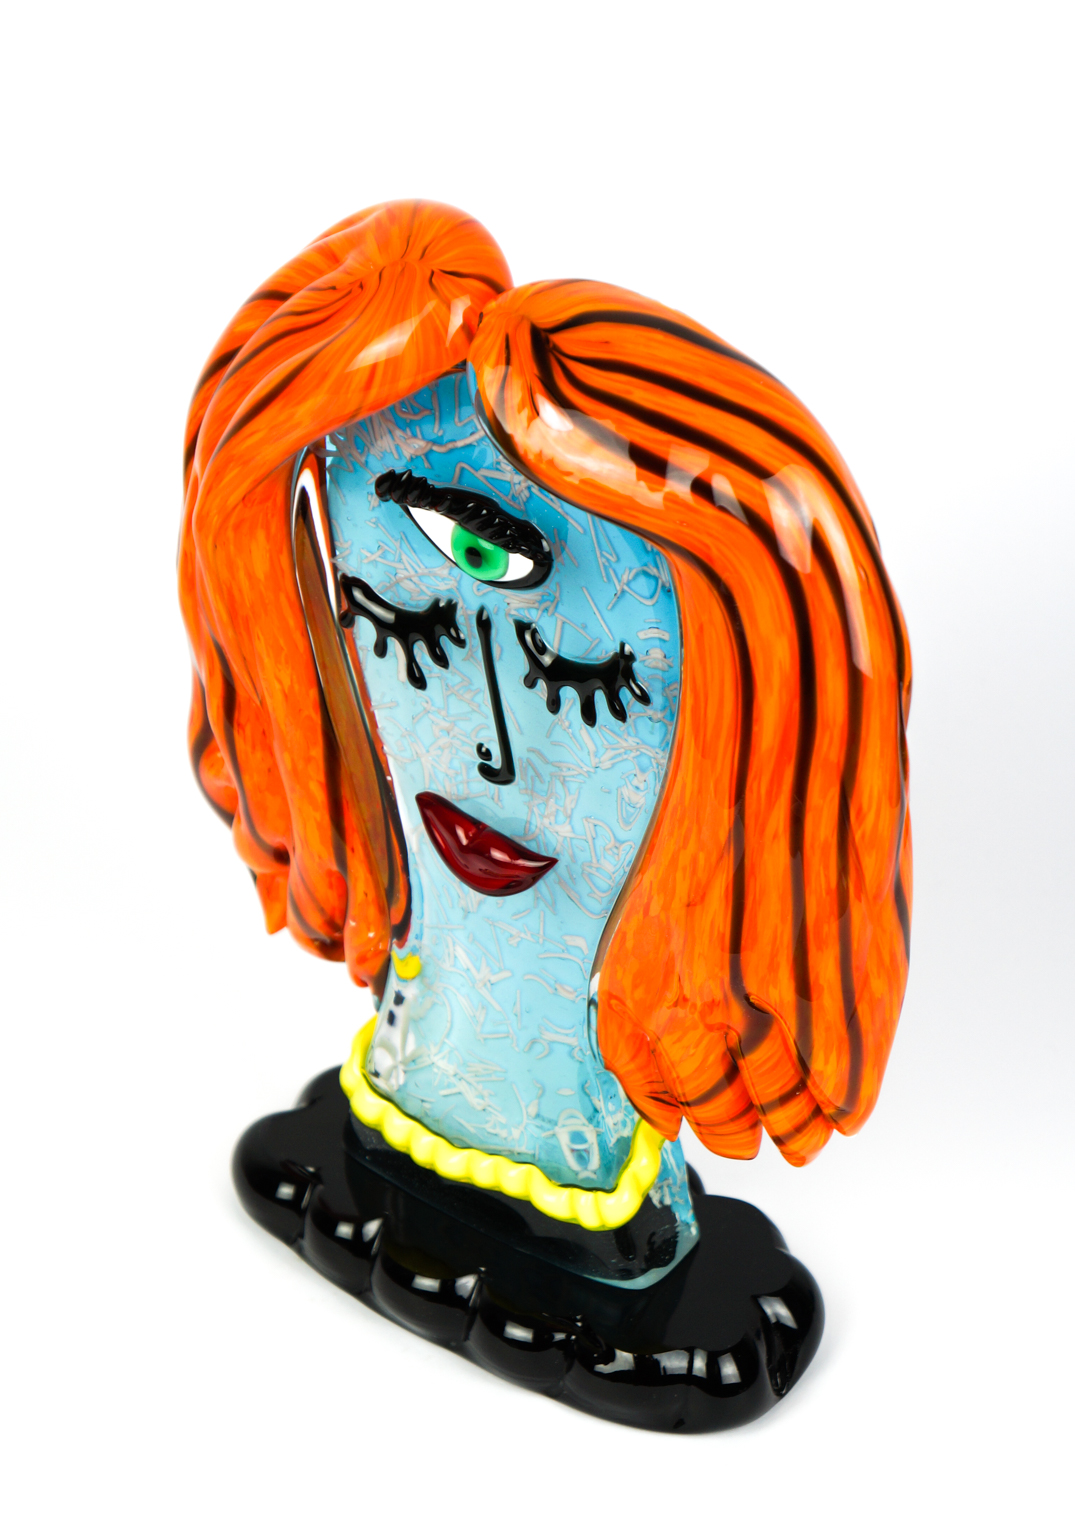 Sally Tribute To Pablo Picasso - Pop Art Glass Sculpture - Made Murano Glass